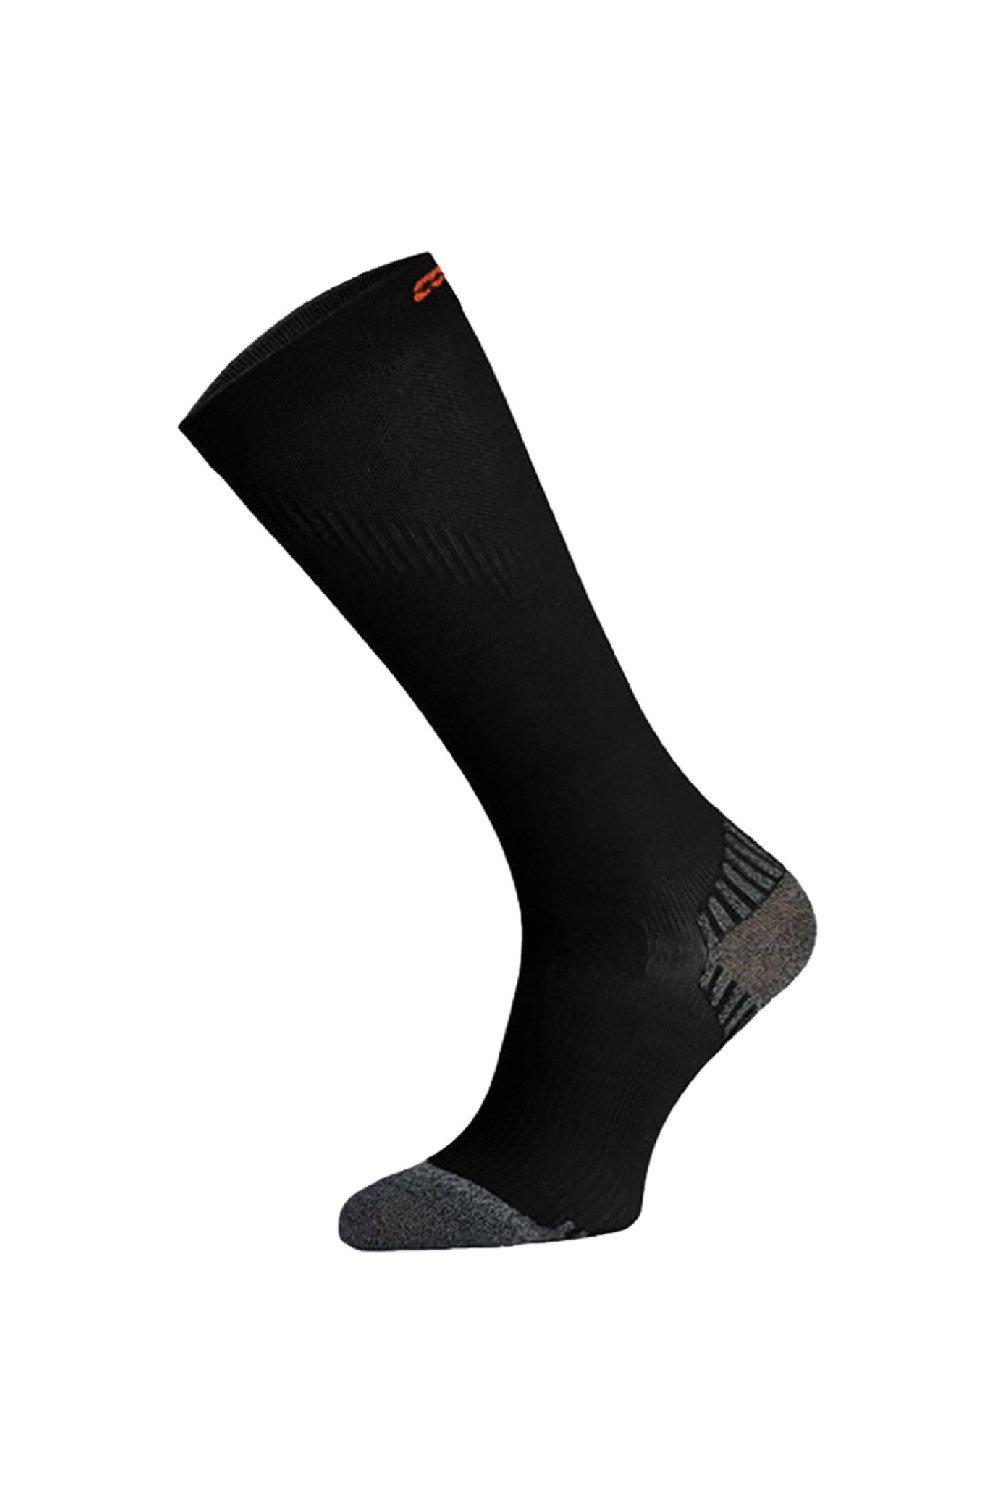 Long Knee High Running Compression Sport Socks